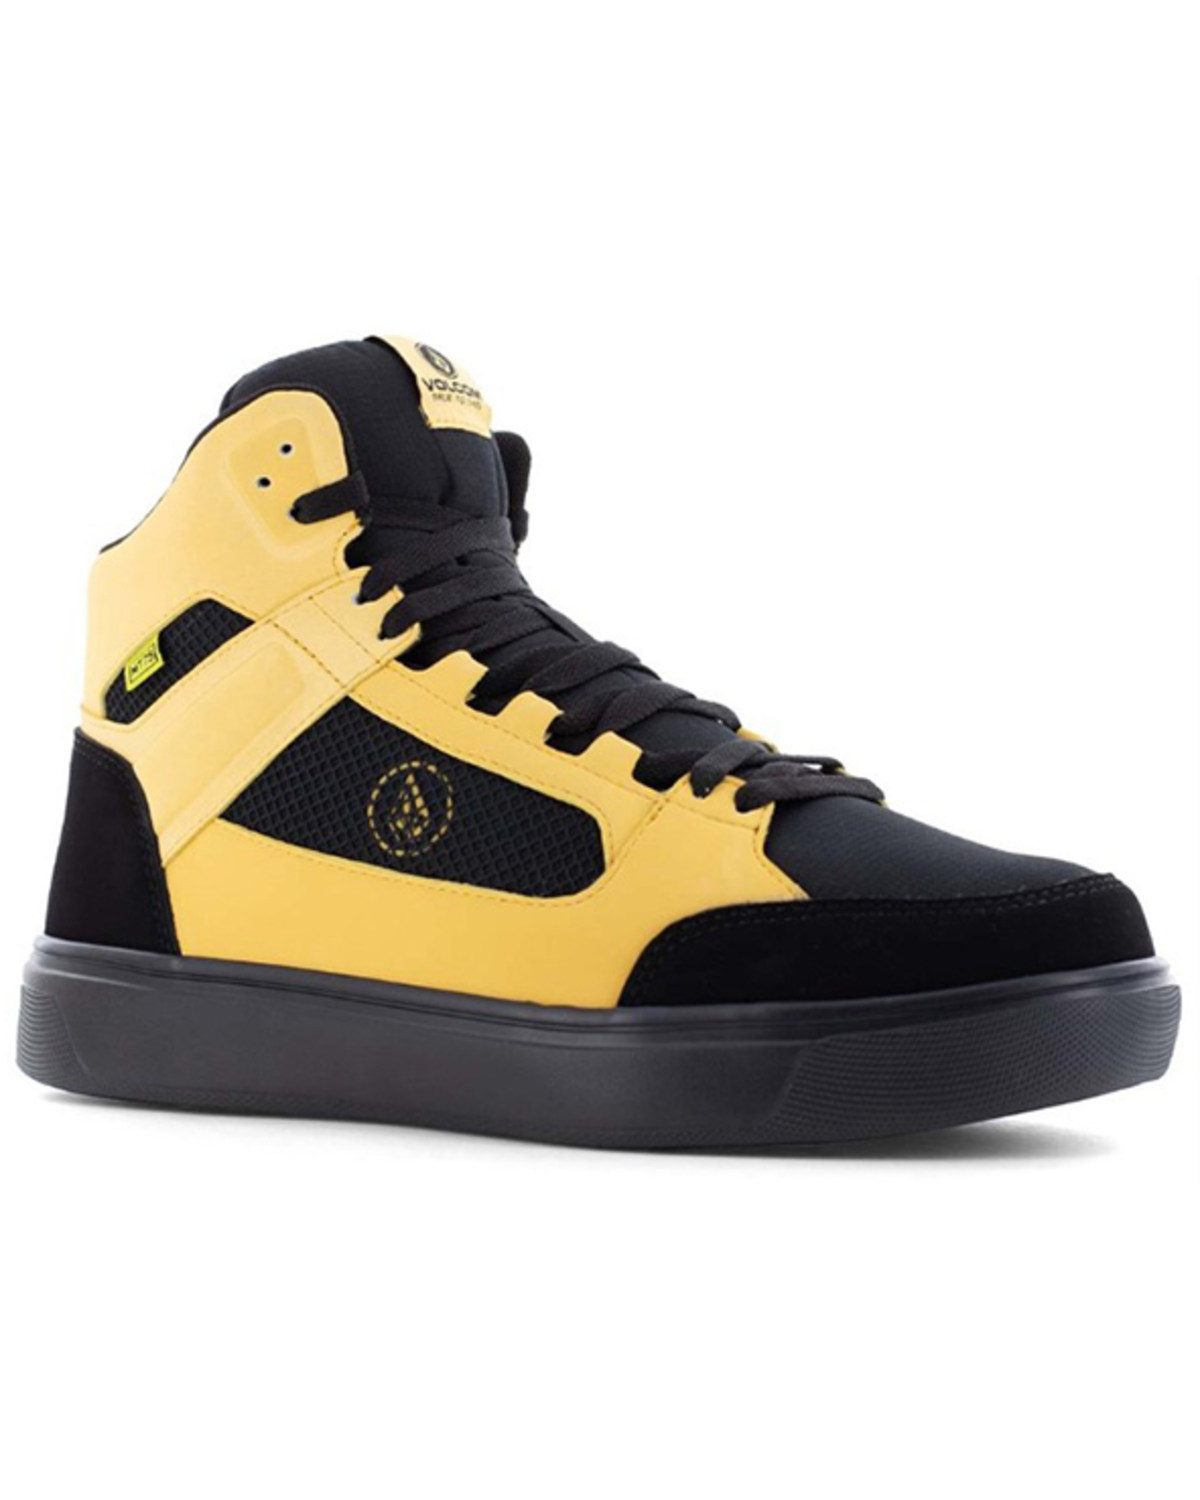 Volcom Men's Evolve Skate Inspired High Top Work Shoes - Composite Toe